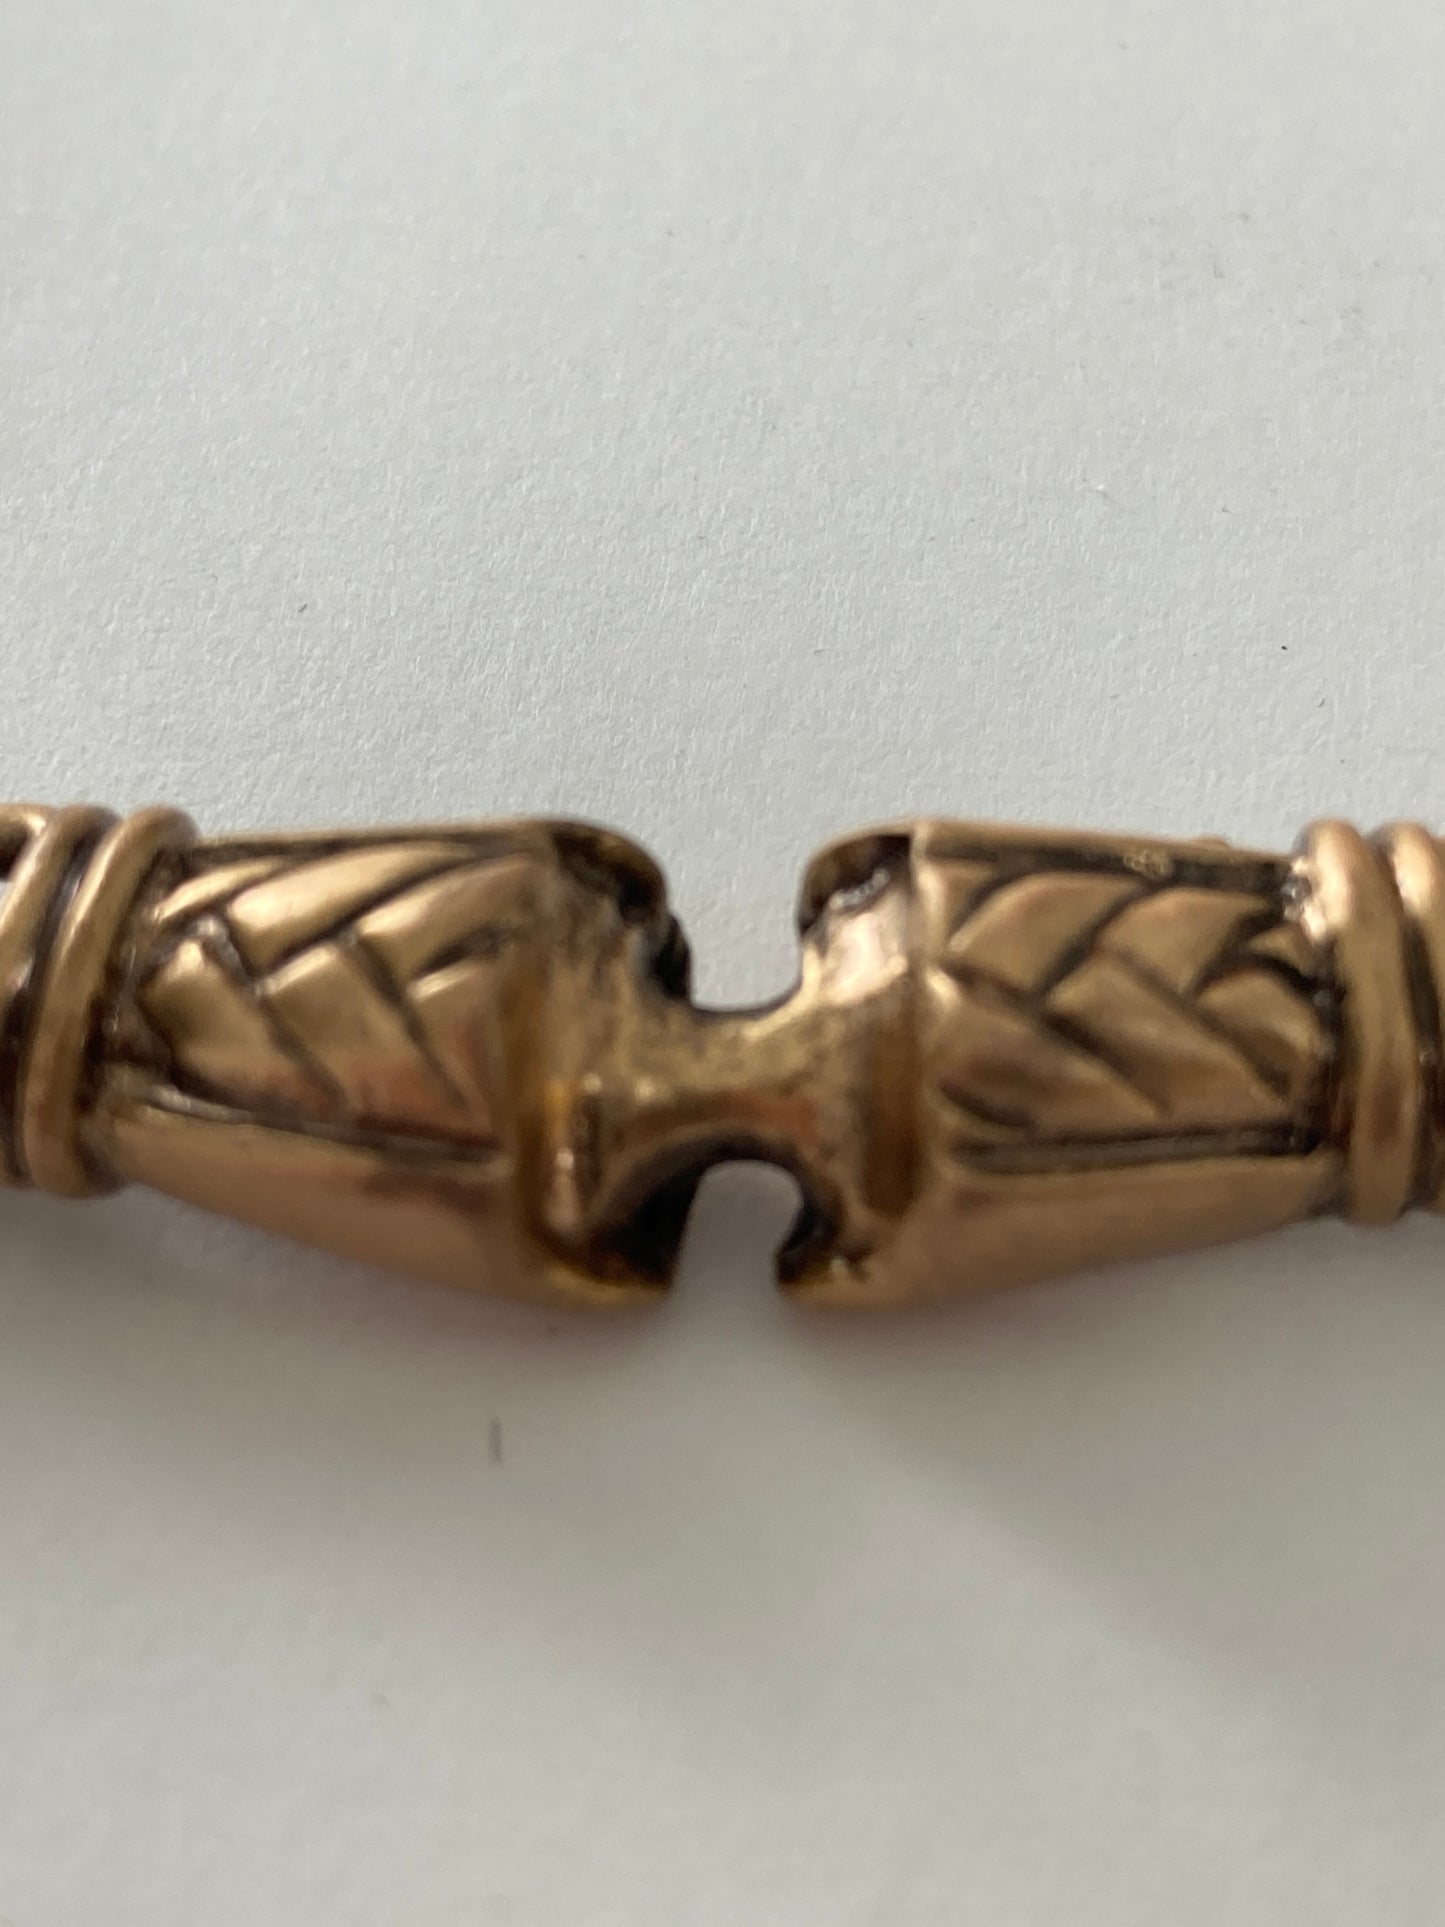 Egyptian Revival Brass Necklace